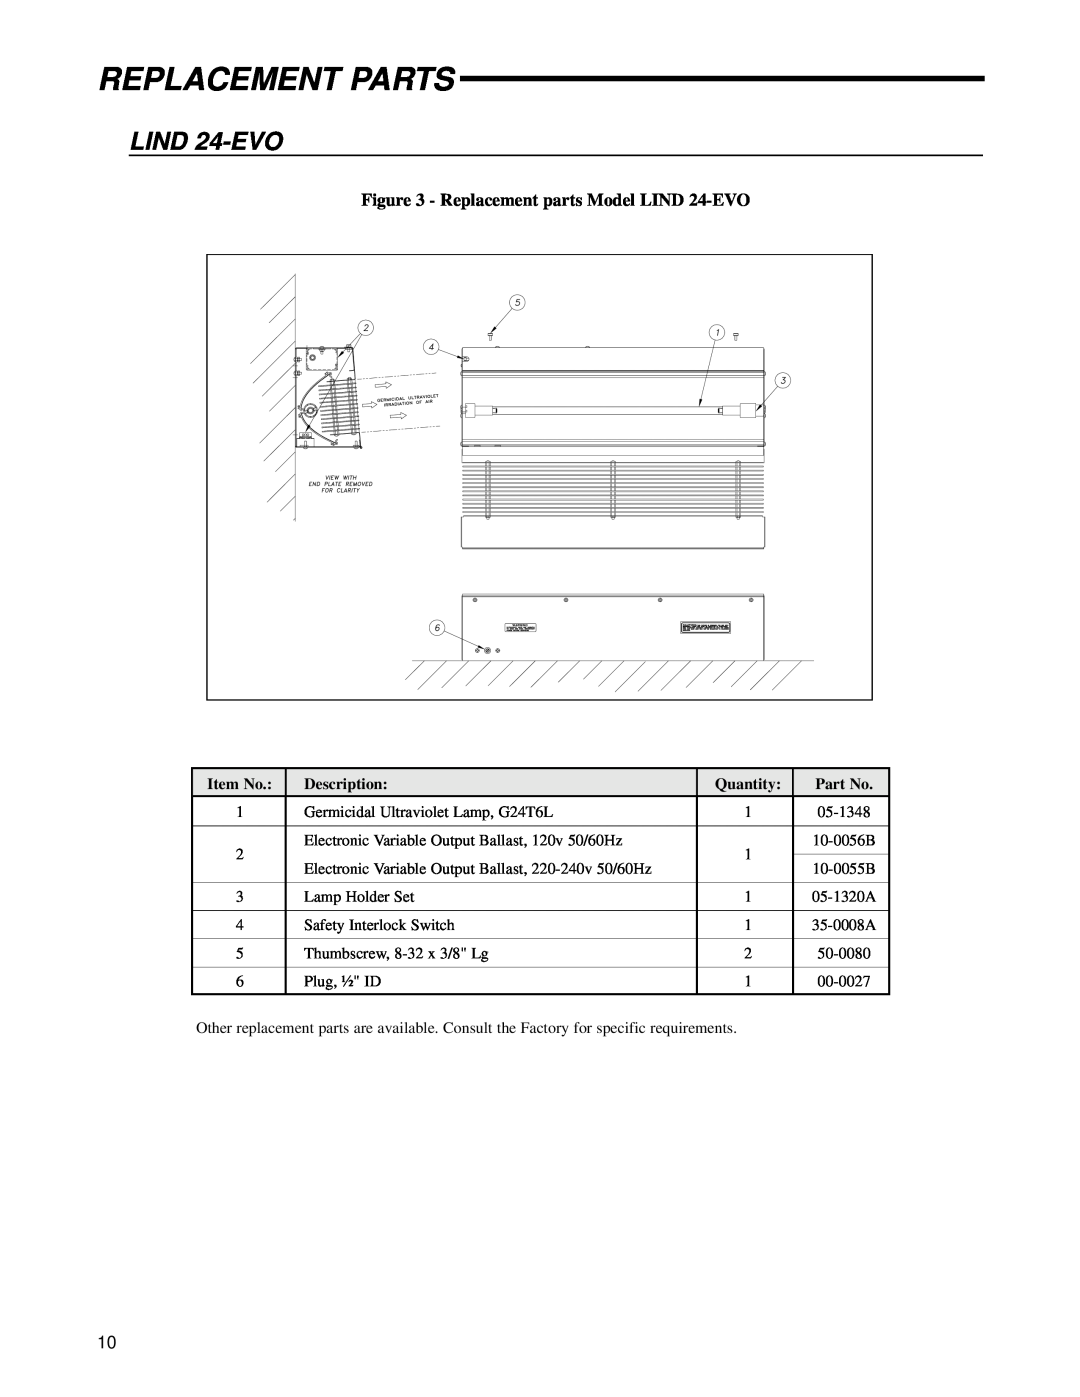 UltraViolet Devices Air Disinfection manual Replacement Parts, LIND 24-EVO, Item No, Description, Quantity 